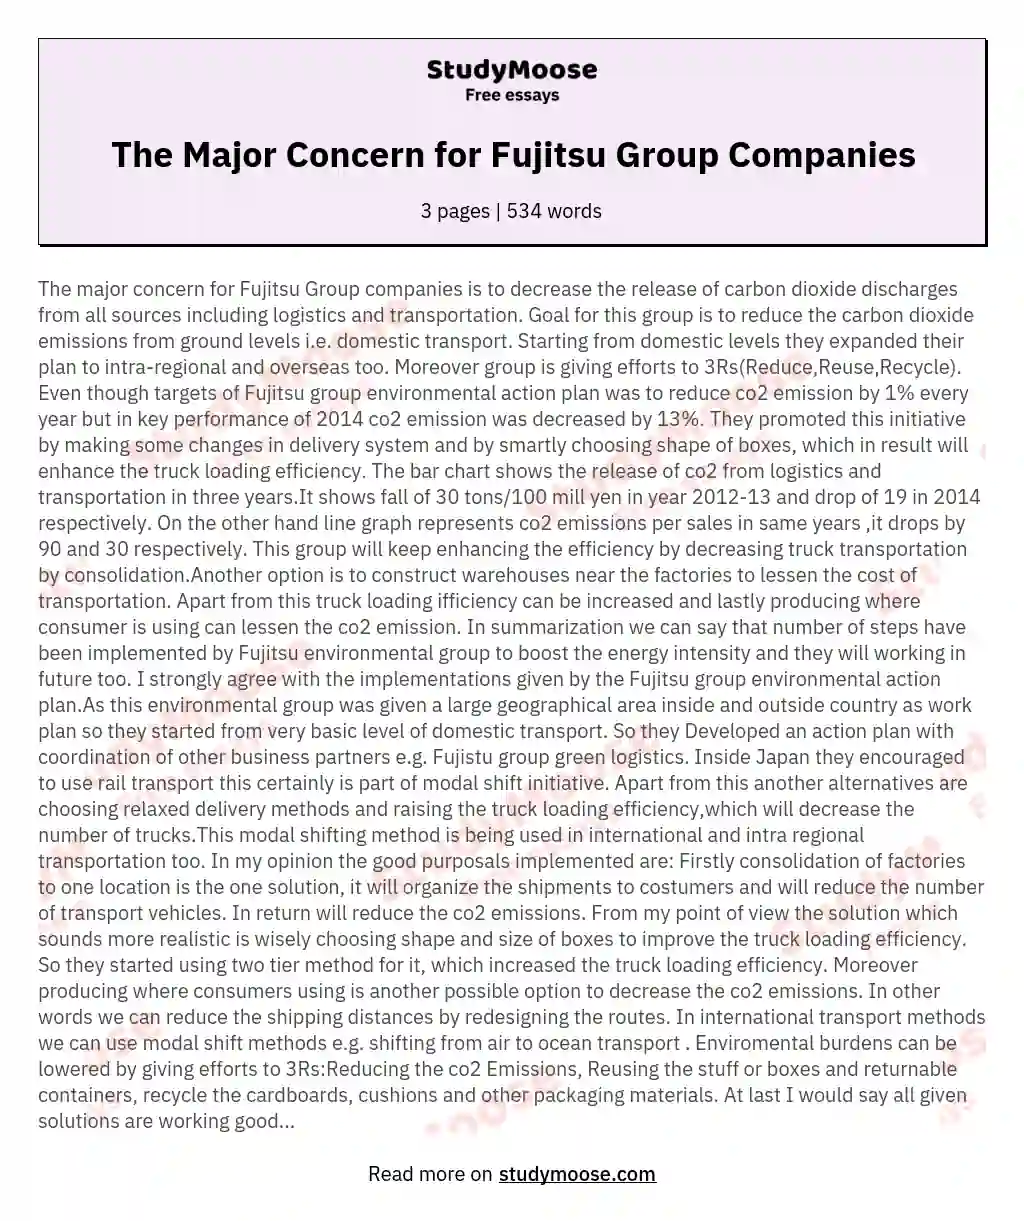 The Major Concern for Fujitsu Group Companies essay